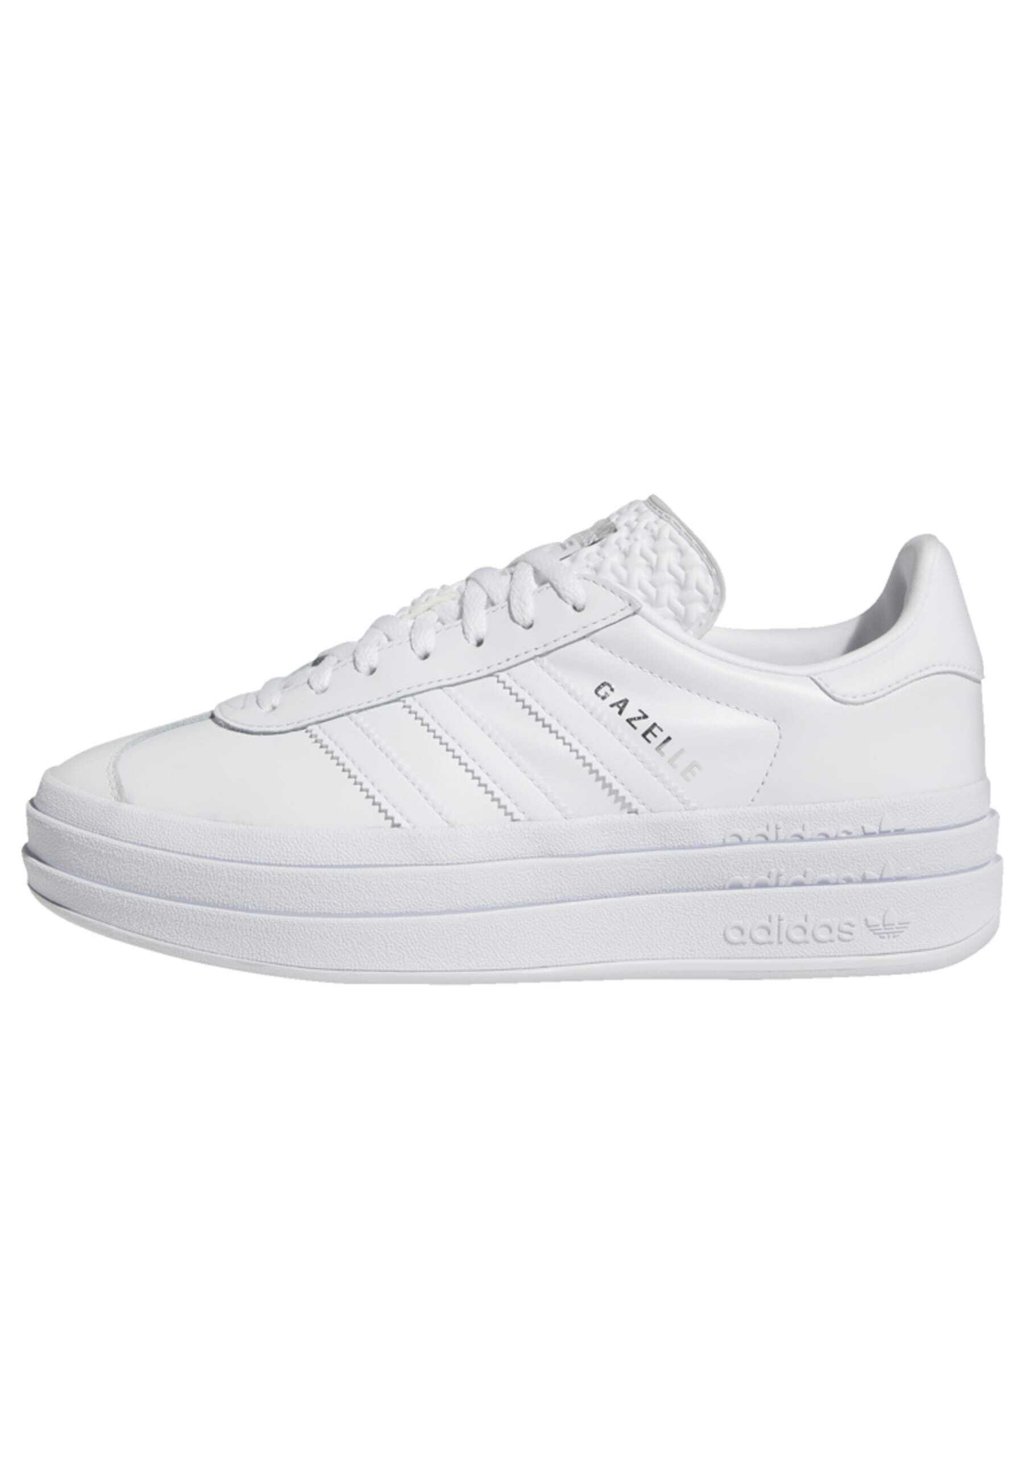 Кроссовки adidas Originals Gazelle Bold W, облачно белое облачно белое облачно белое футболка h57399 adidas wfarmgt white s